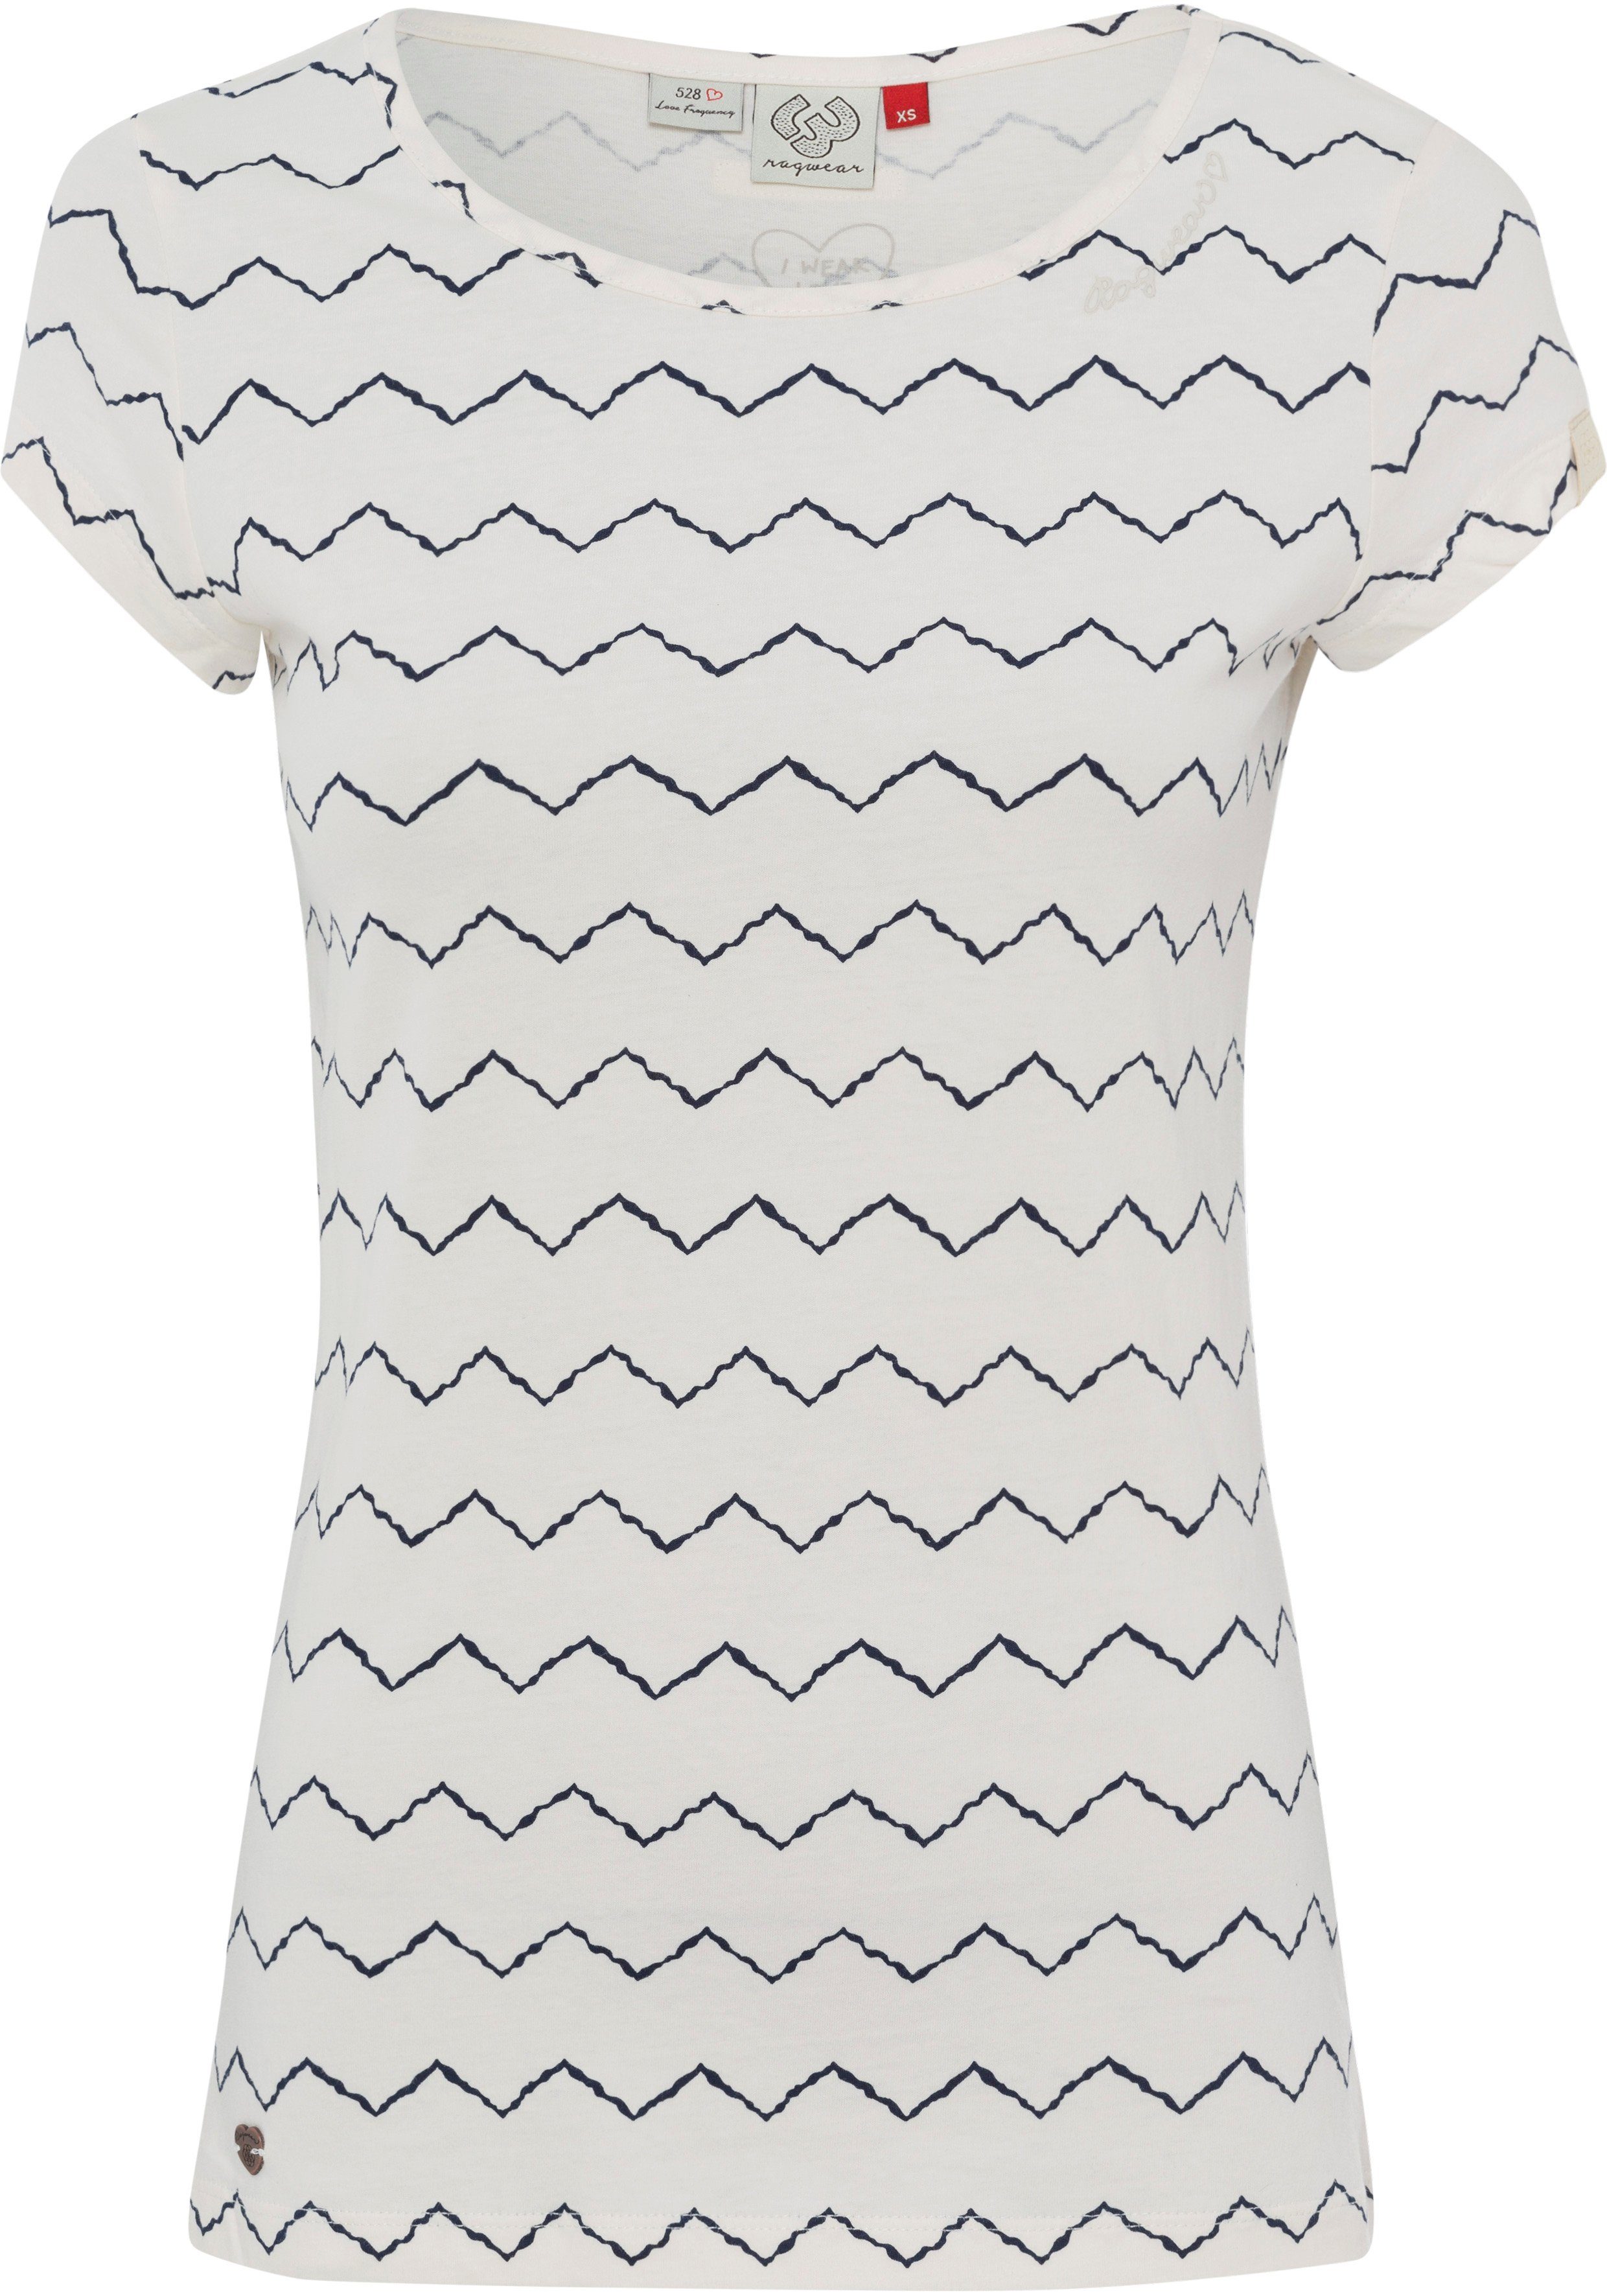 ZAG im Ragwear Zag offwhite MINT T-Shirt 7008 Allover-Print-Design ZIG Zig